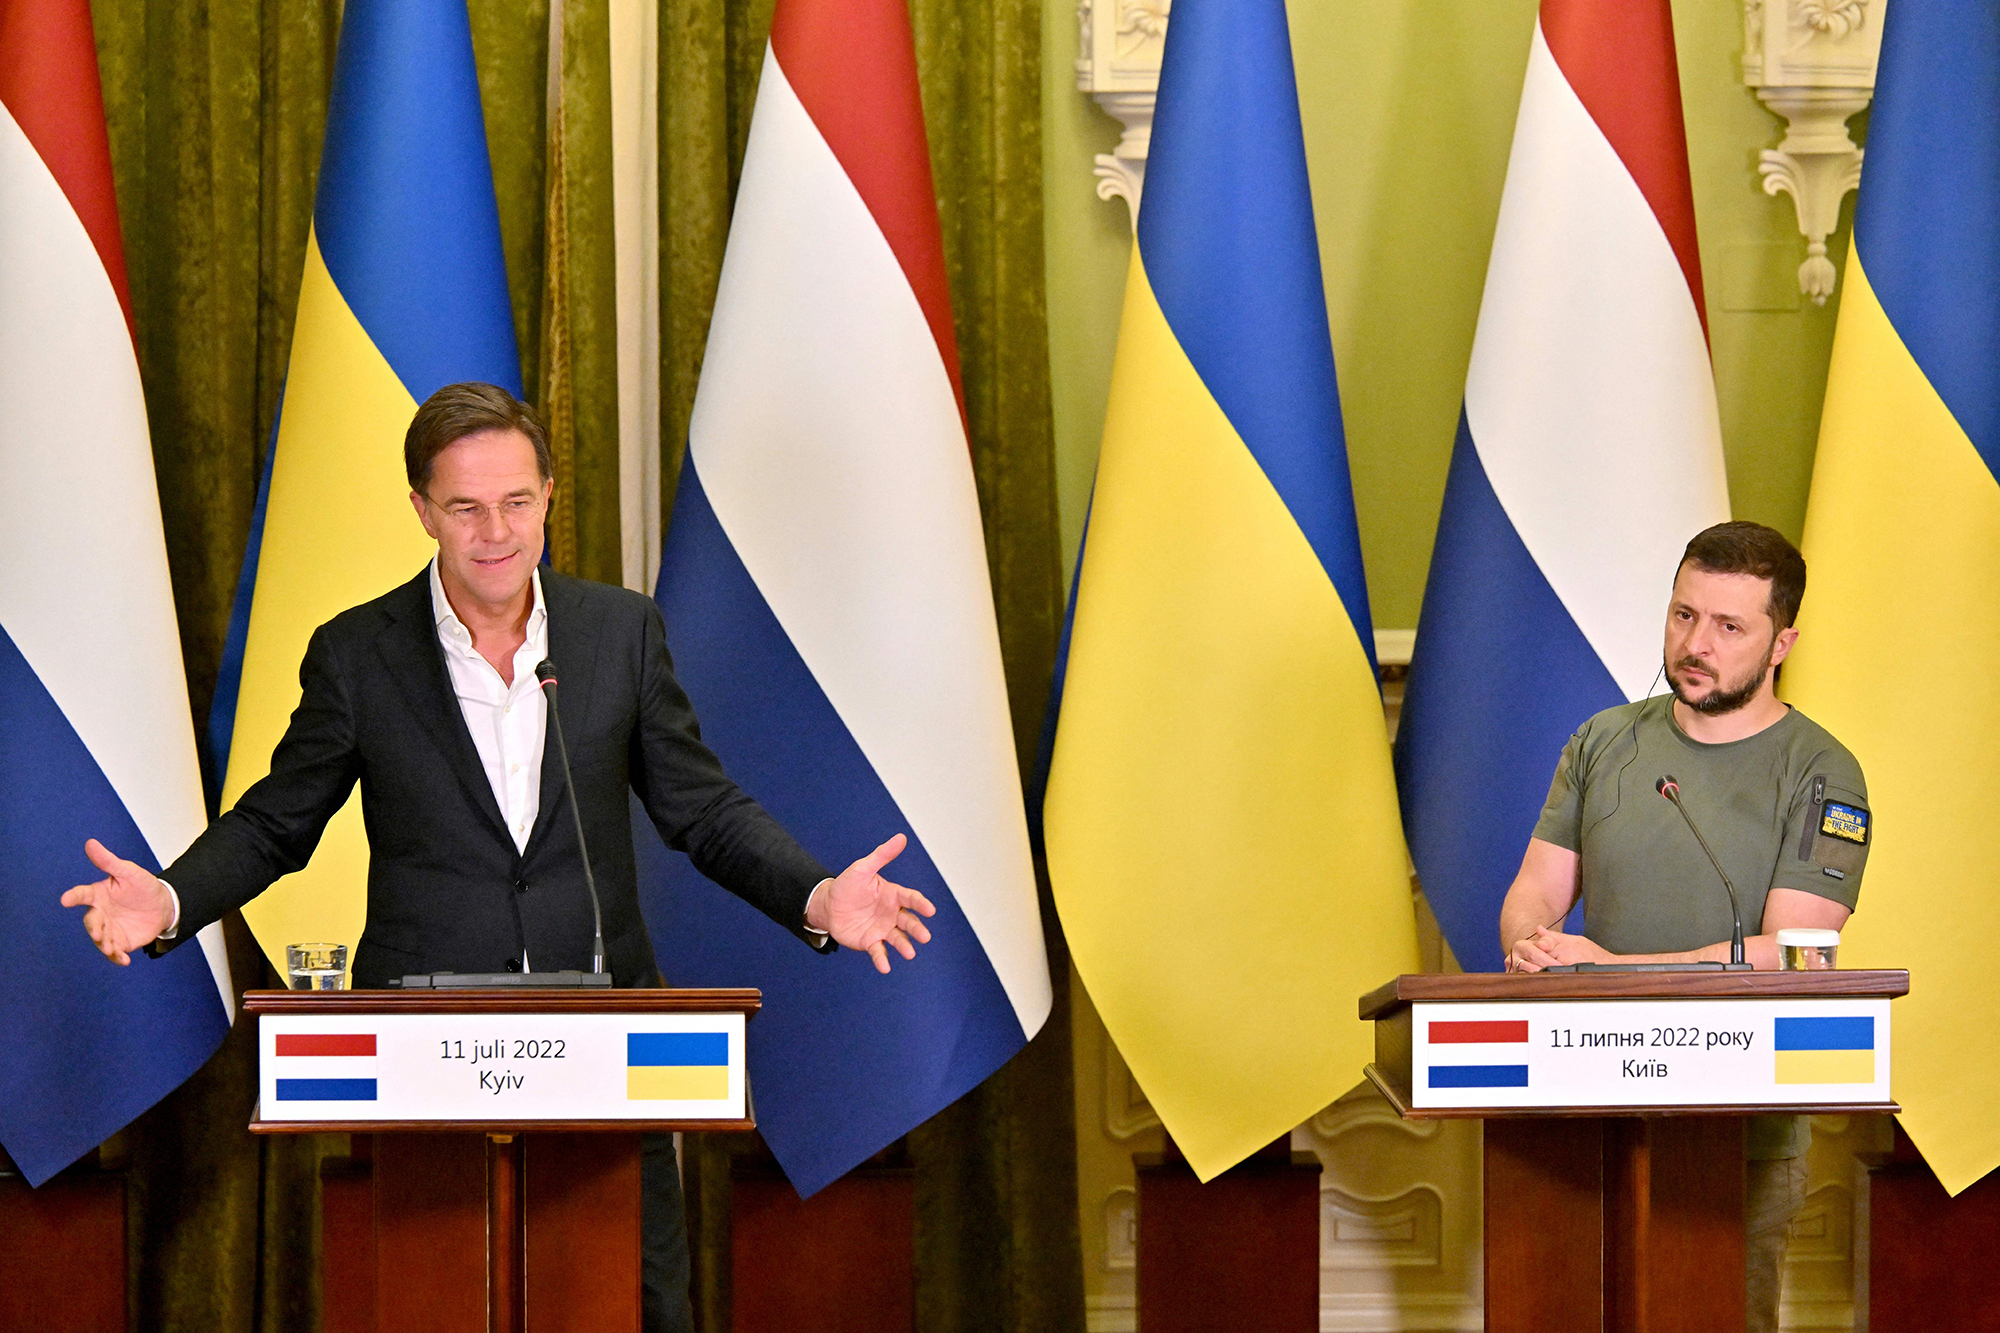 Netherlands Prime Minister Mark Rutte, left, with Ukrainian President Volodymyr Zelensky while addressing a press conference in Kyiv on Monday,